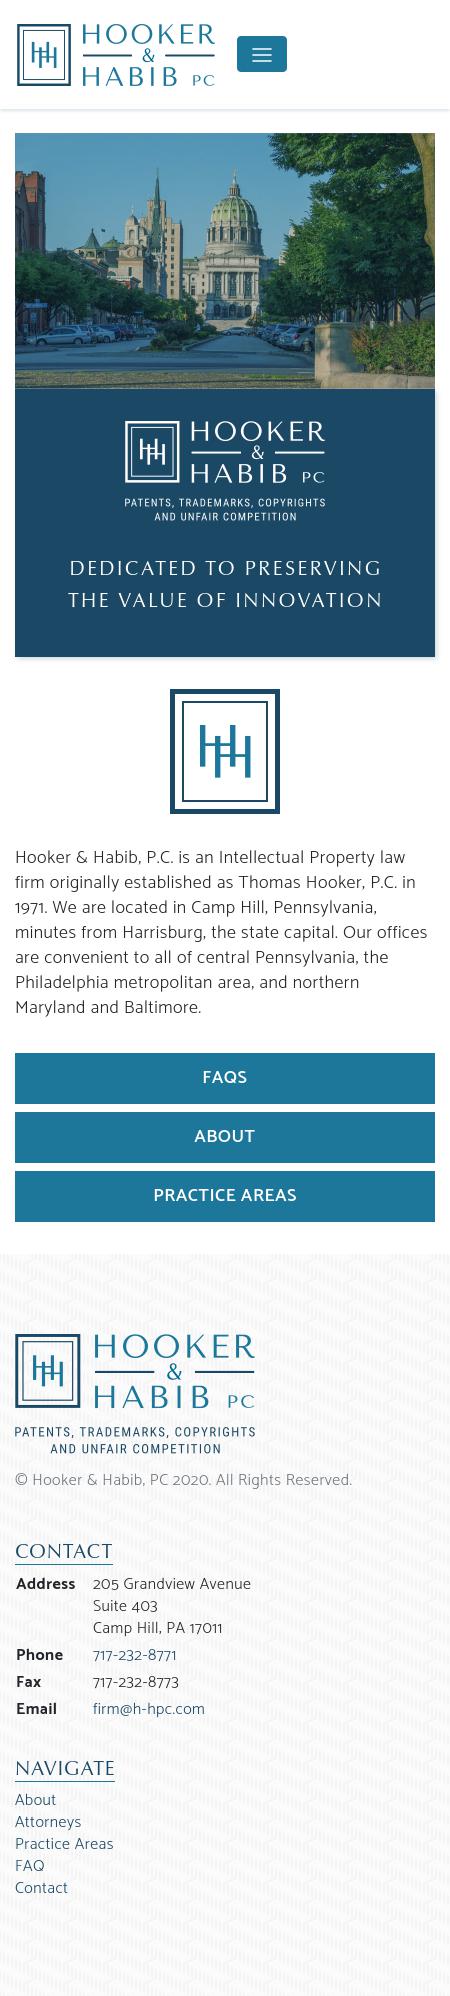 Hooker & Habib, P.C. - Harrisburg PA Lawyers